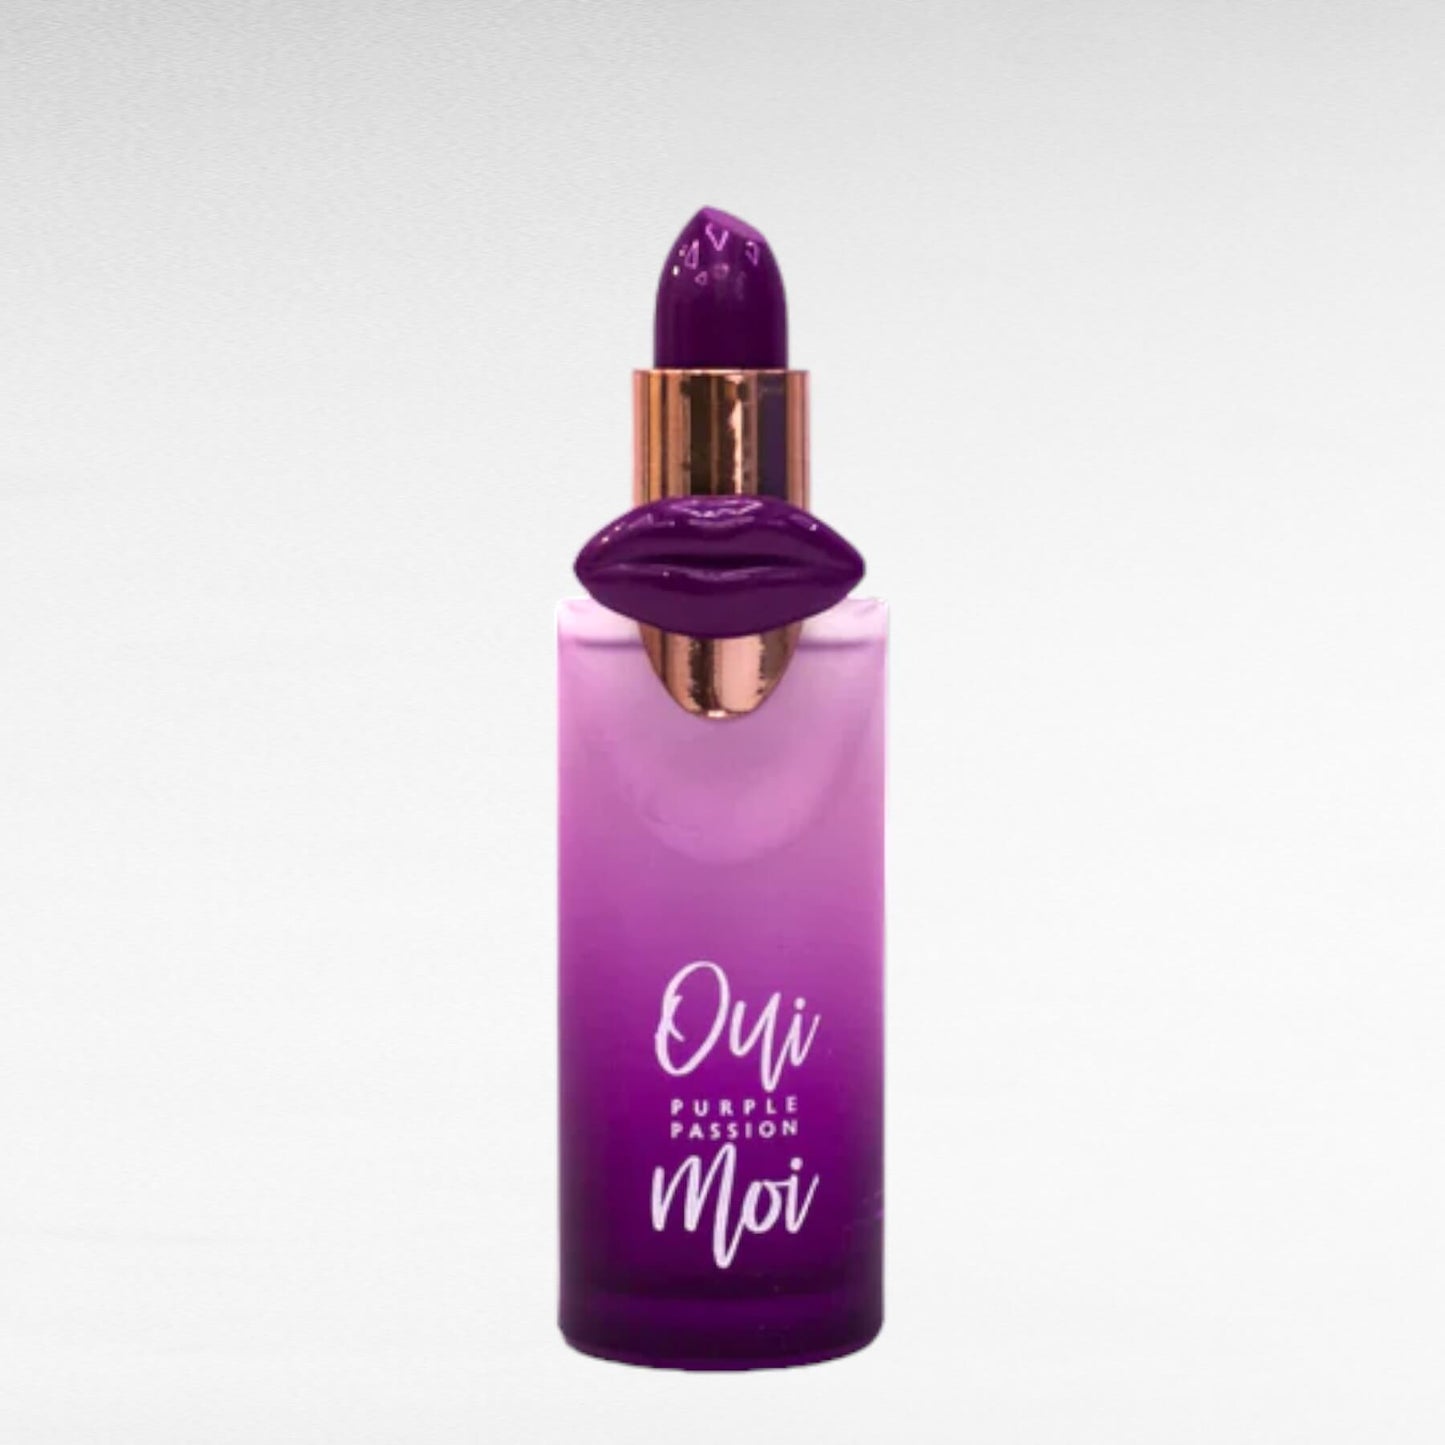 alt=" Perfume 0ui Moi Purple Satin Mirage Feminino - Frasco de perfume em vidro com design elegante"